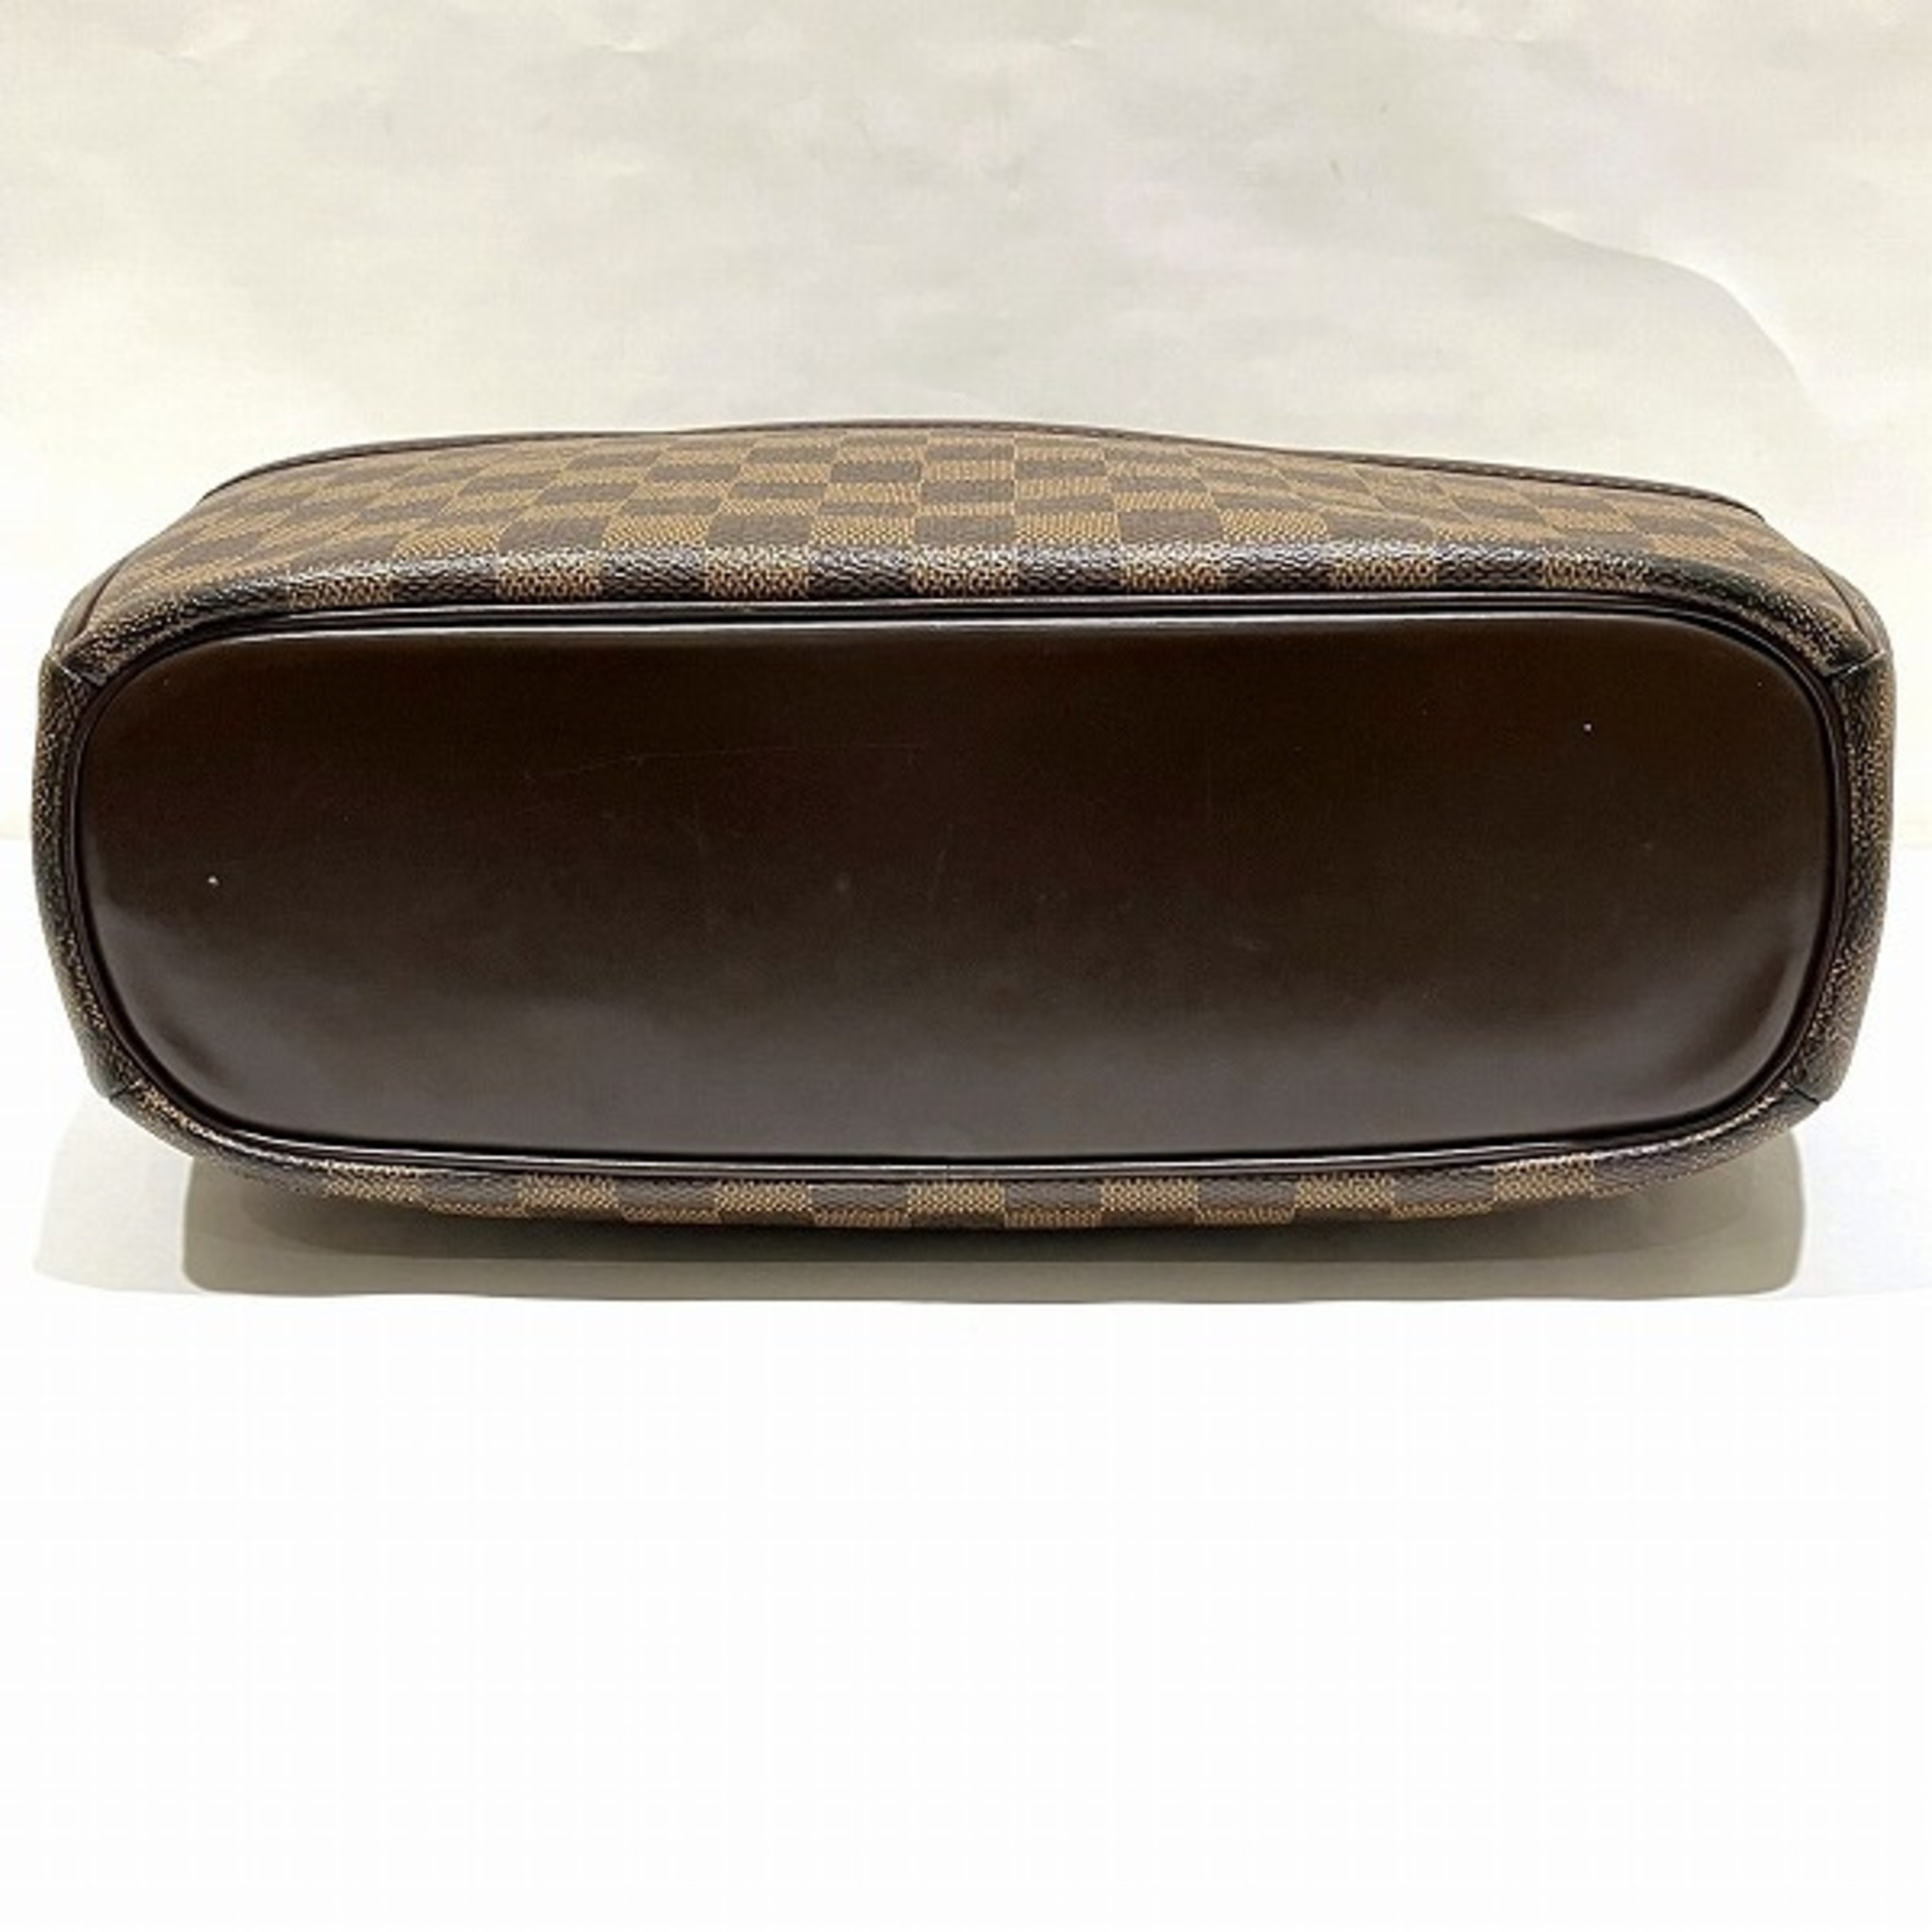 Louis Vuitton Damier Saria Horizontal N51282 Bag Handbag Women's